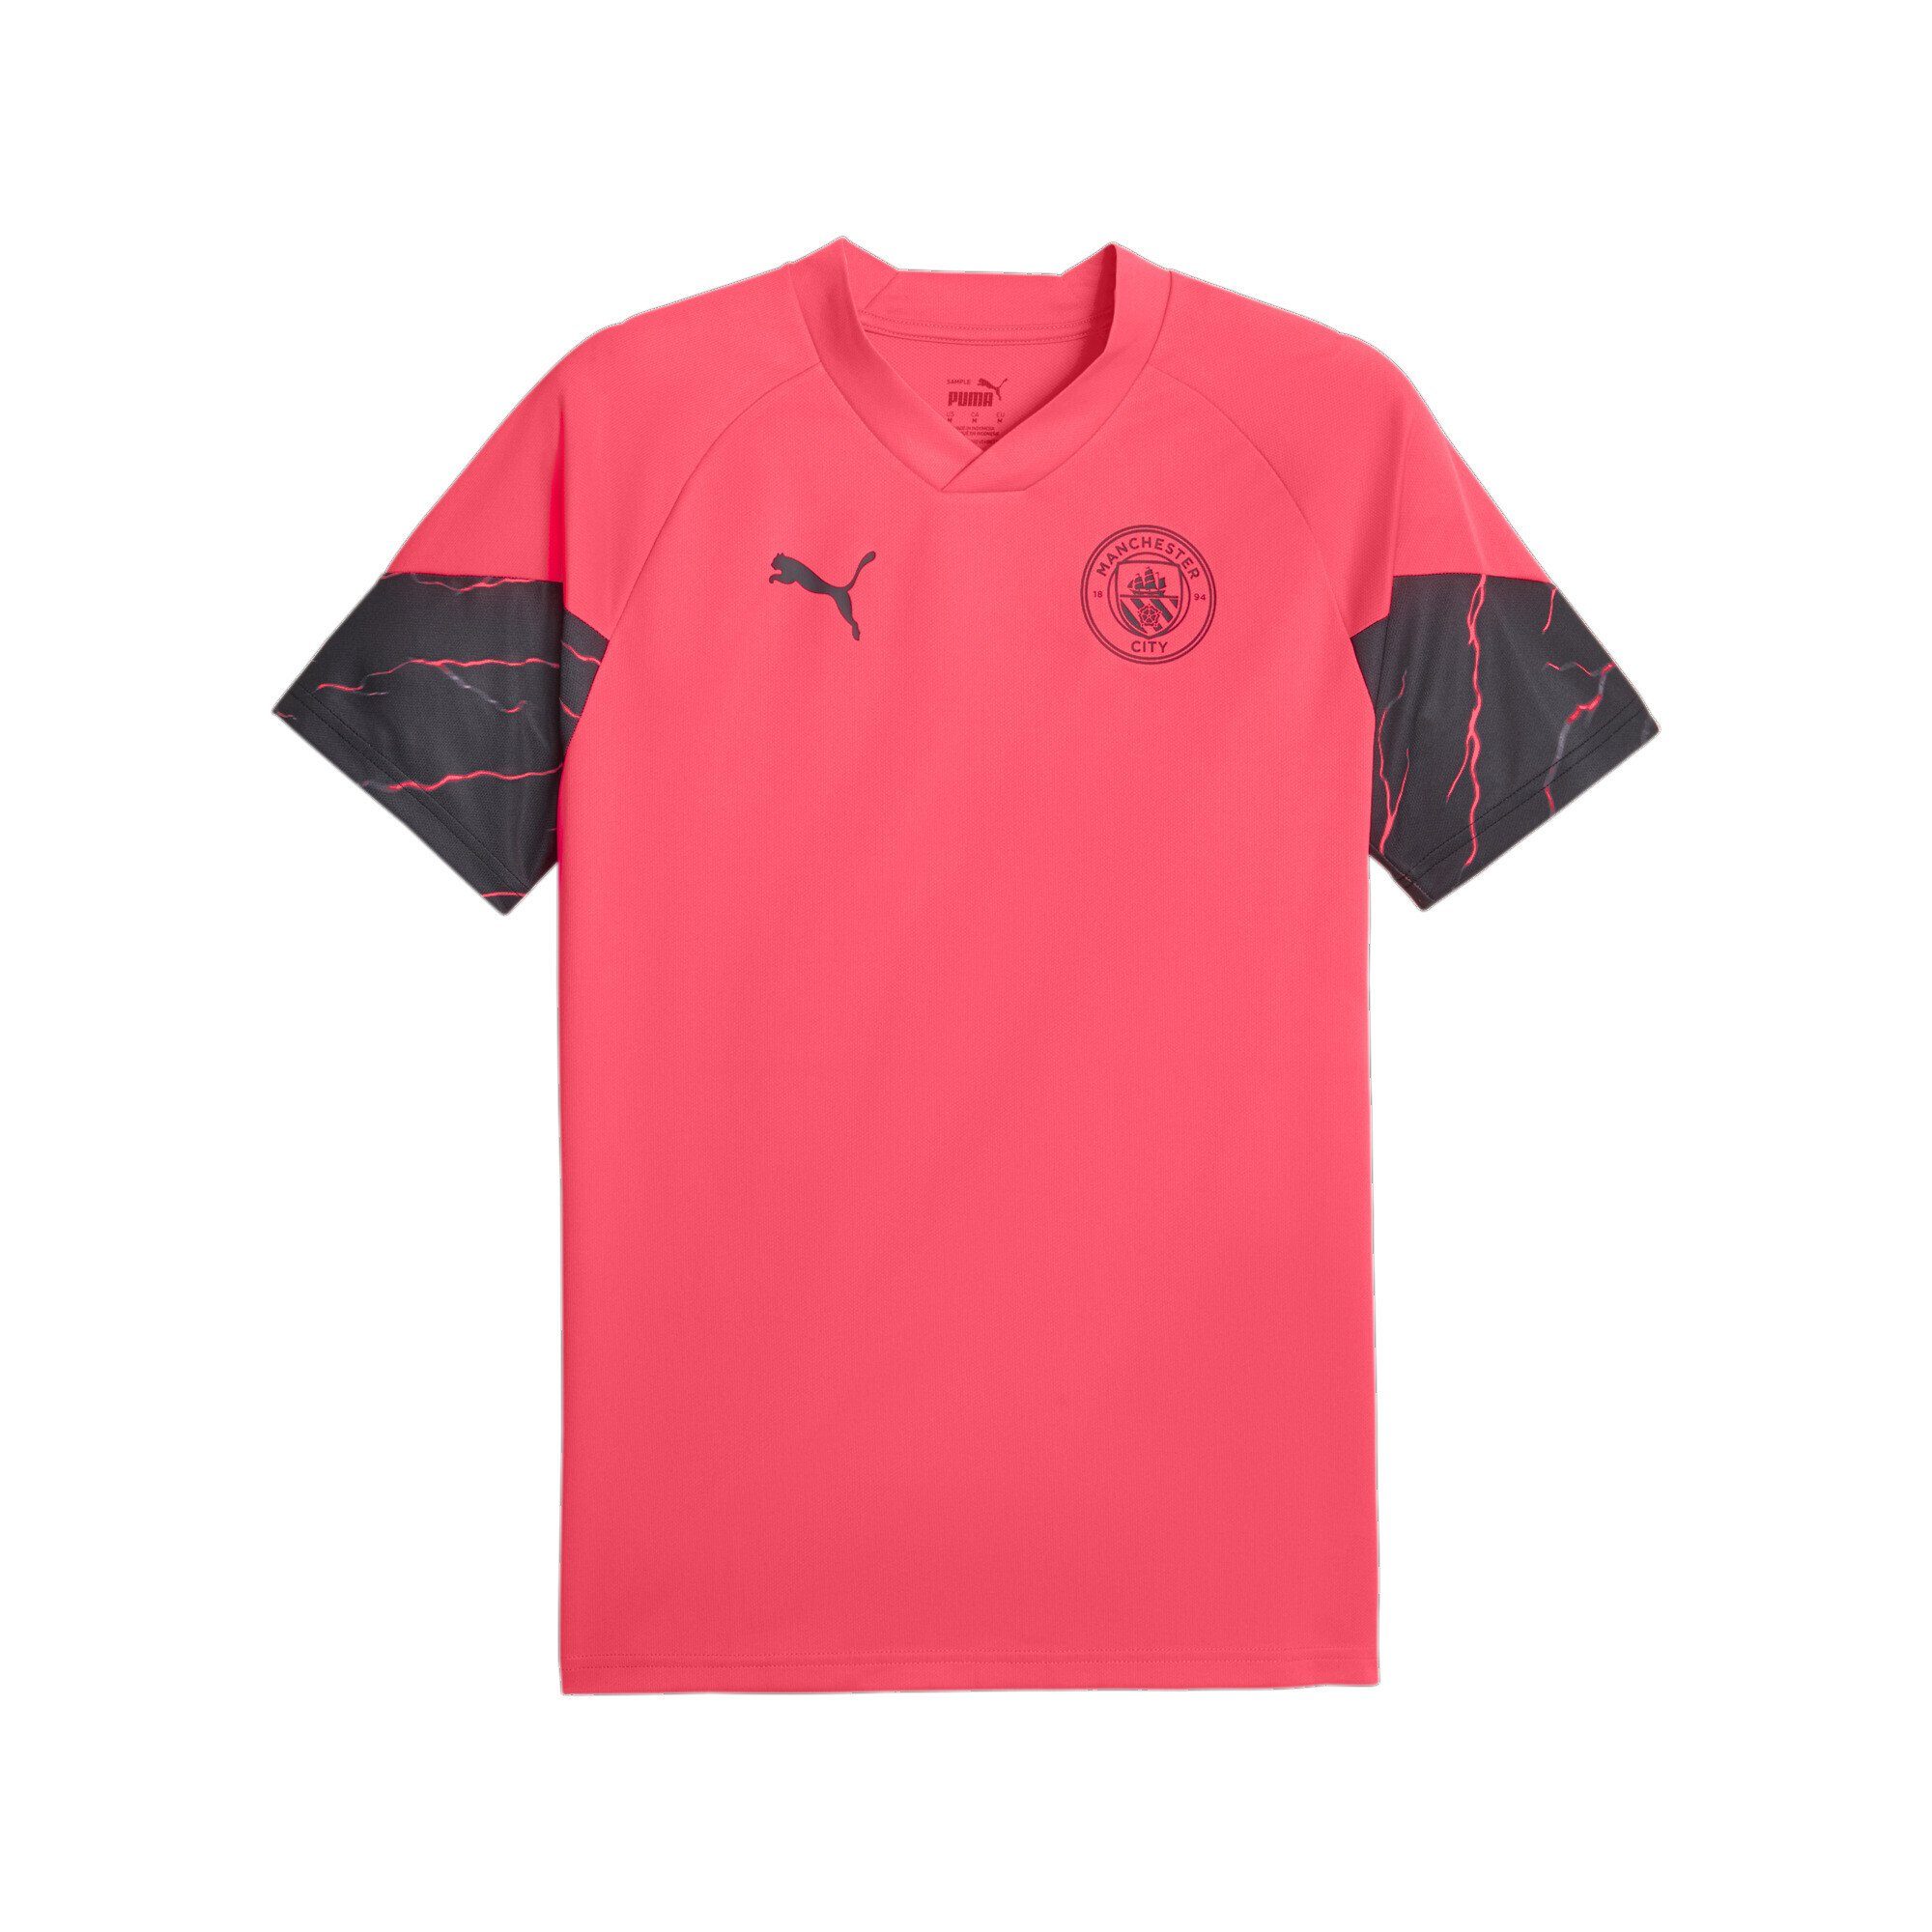 PUMA Trainingsshirt Manchester City Fußball-Trainingstrikot Herren Sunset Glow Dark Navy Pink Black